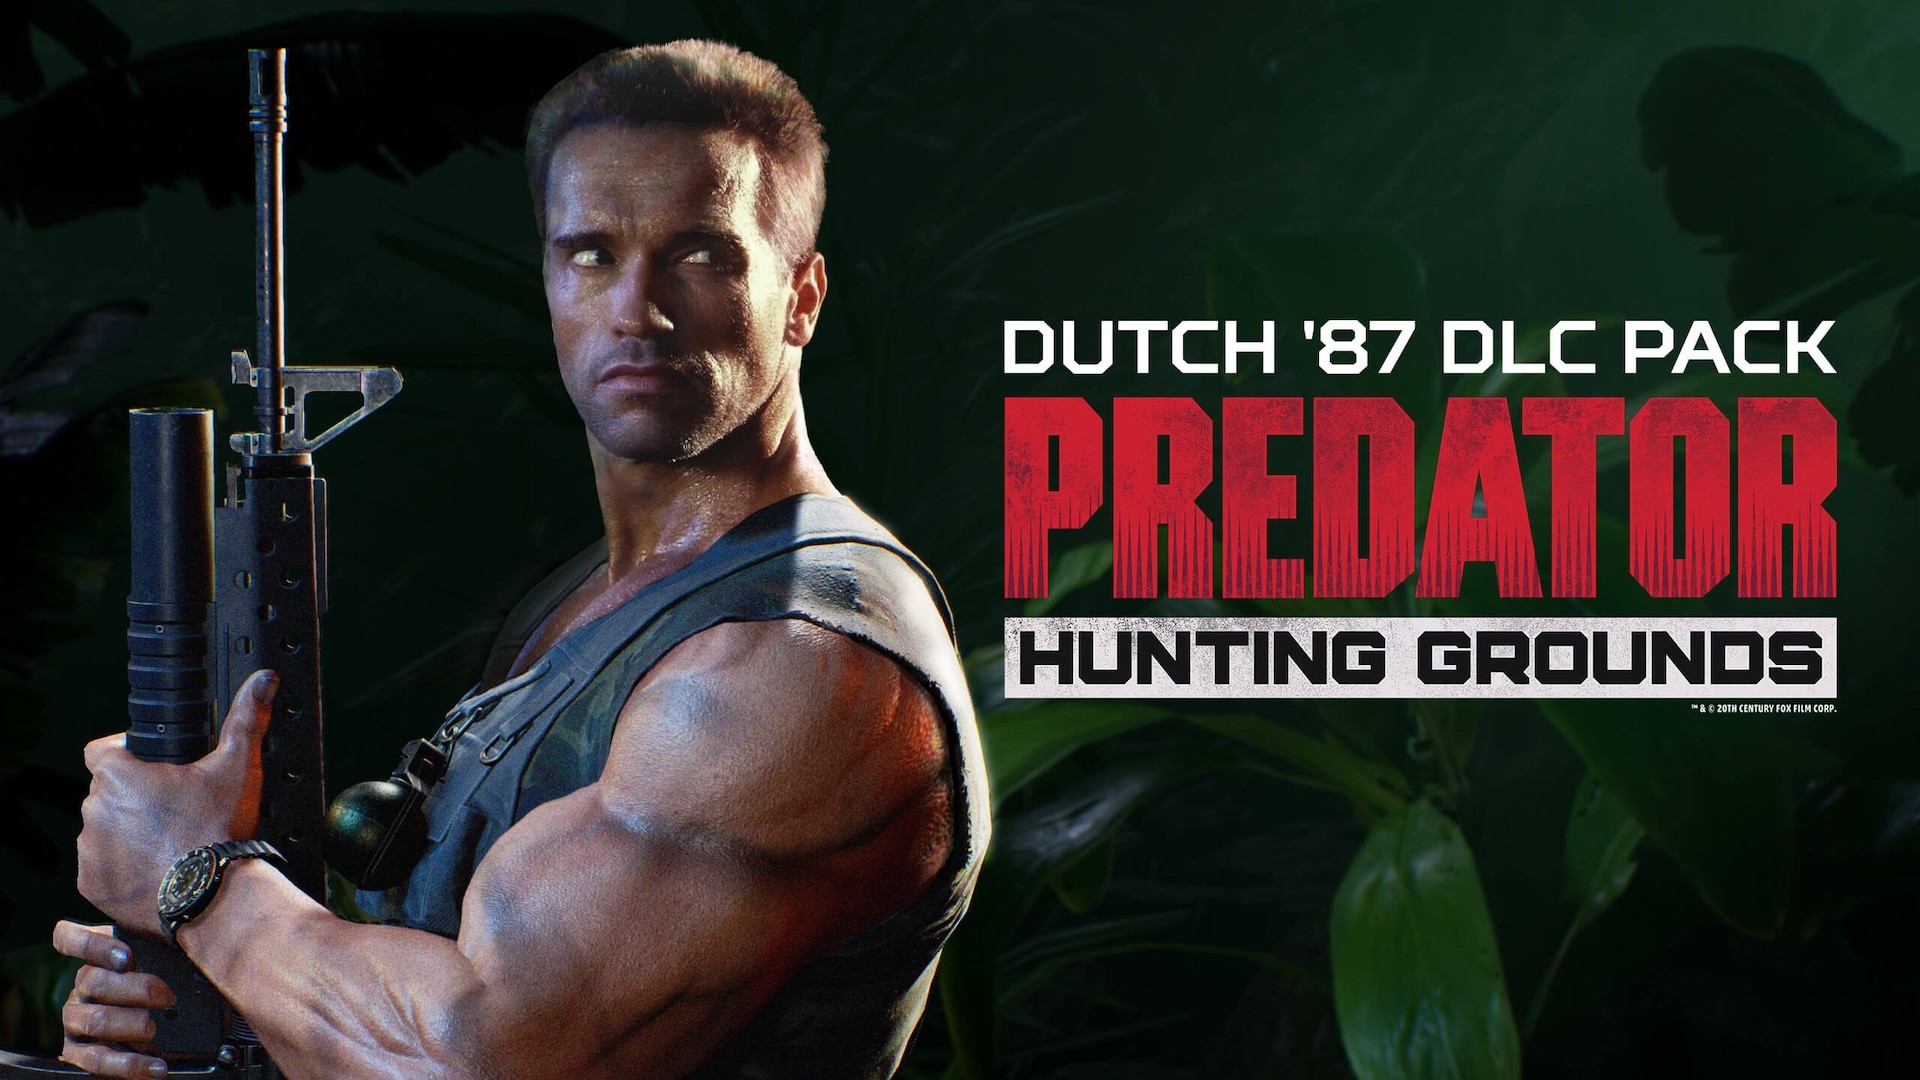 [$ 2.21] Predator: Hunting Grounds - Dutch '87 DLC Pack Steam CD Key